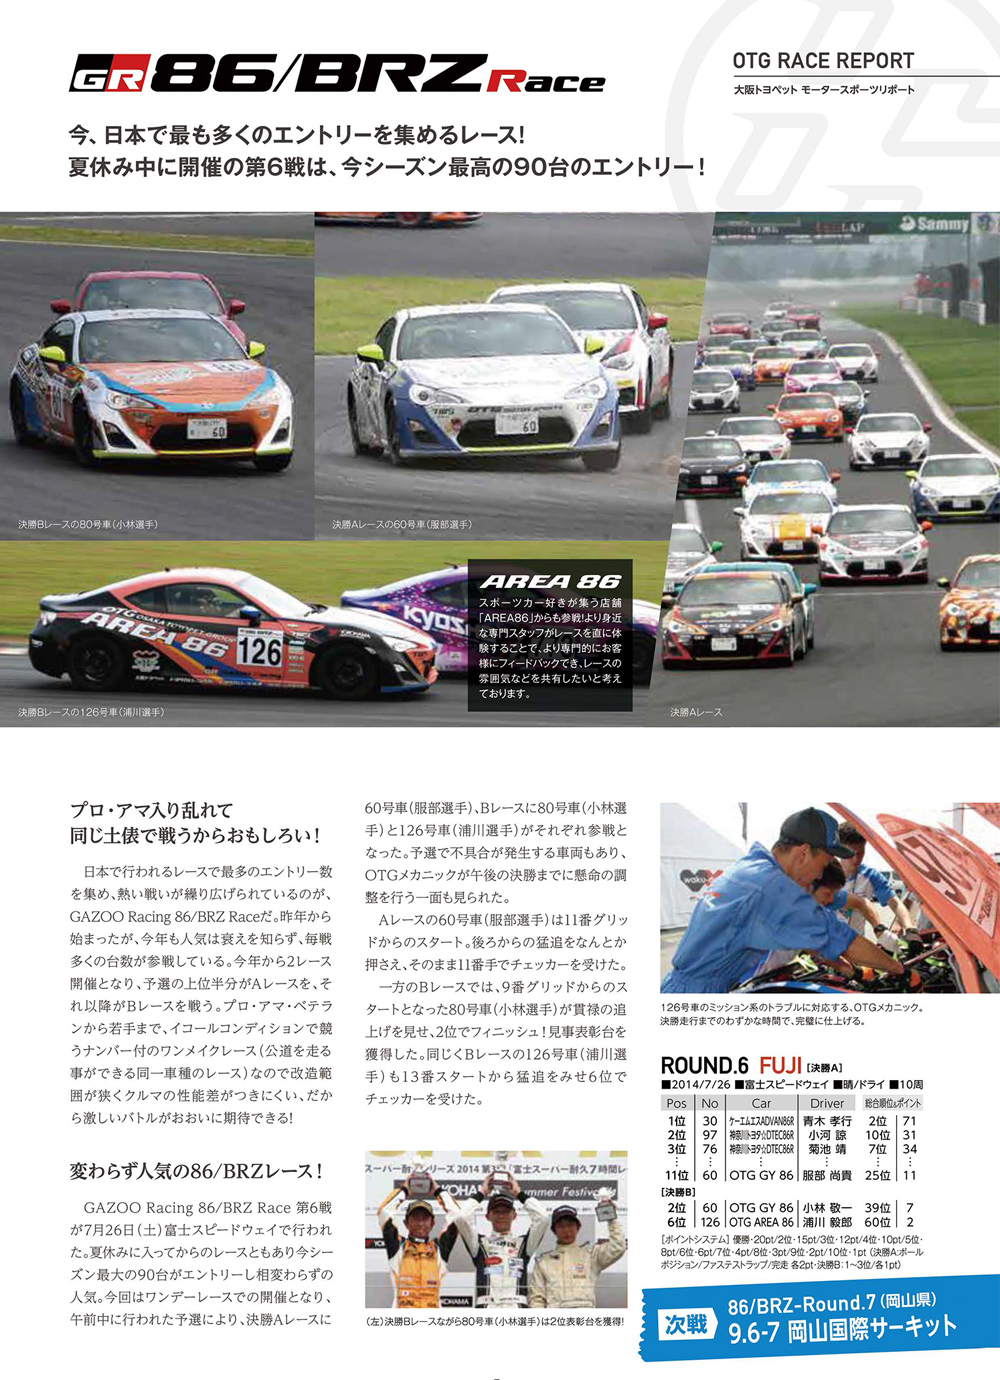 http://www.osaka-toyopet.jp/otg-ms/86brz_race/img/motorsports1409-2.jpg